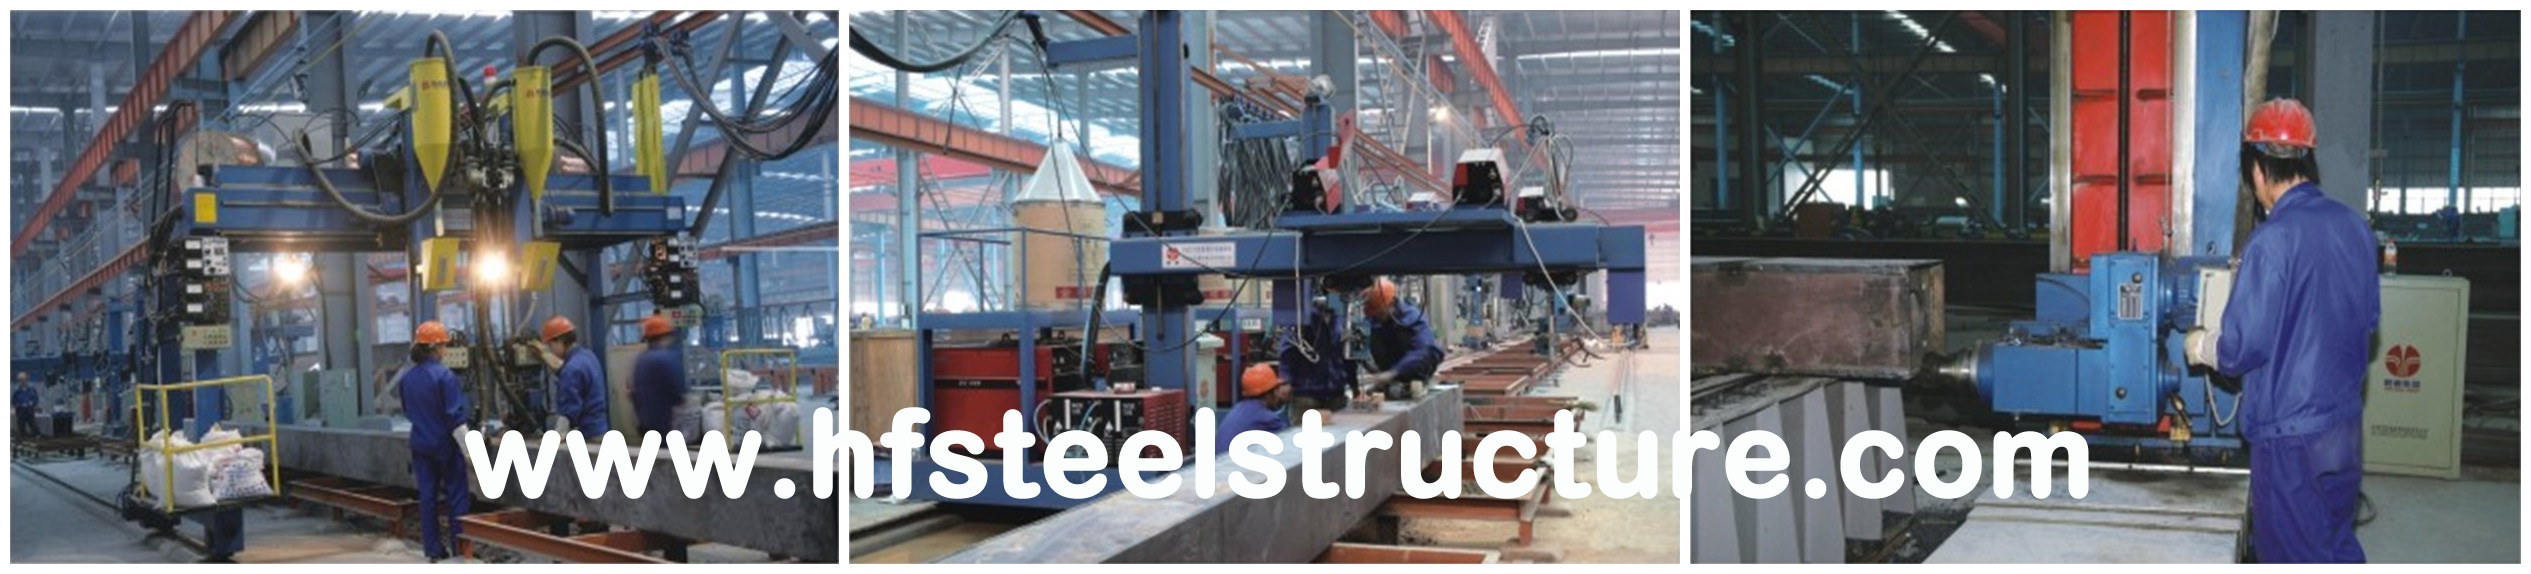 Optimized Prefab Industrial Steel Buildings With Minimum Steel Quantity Used